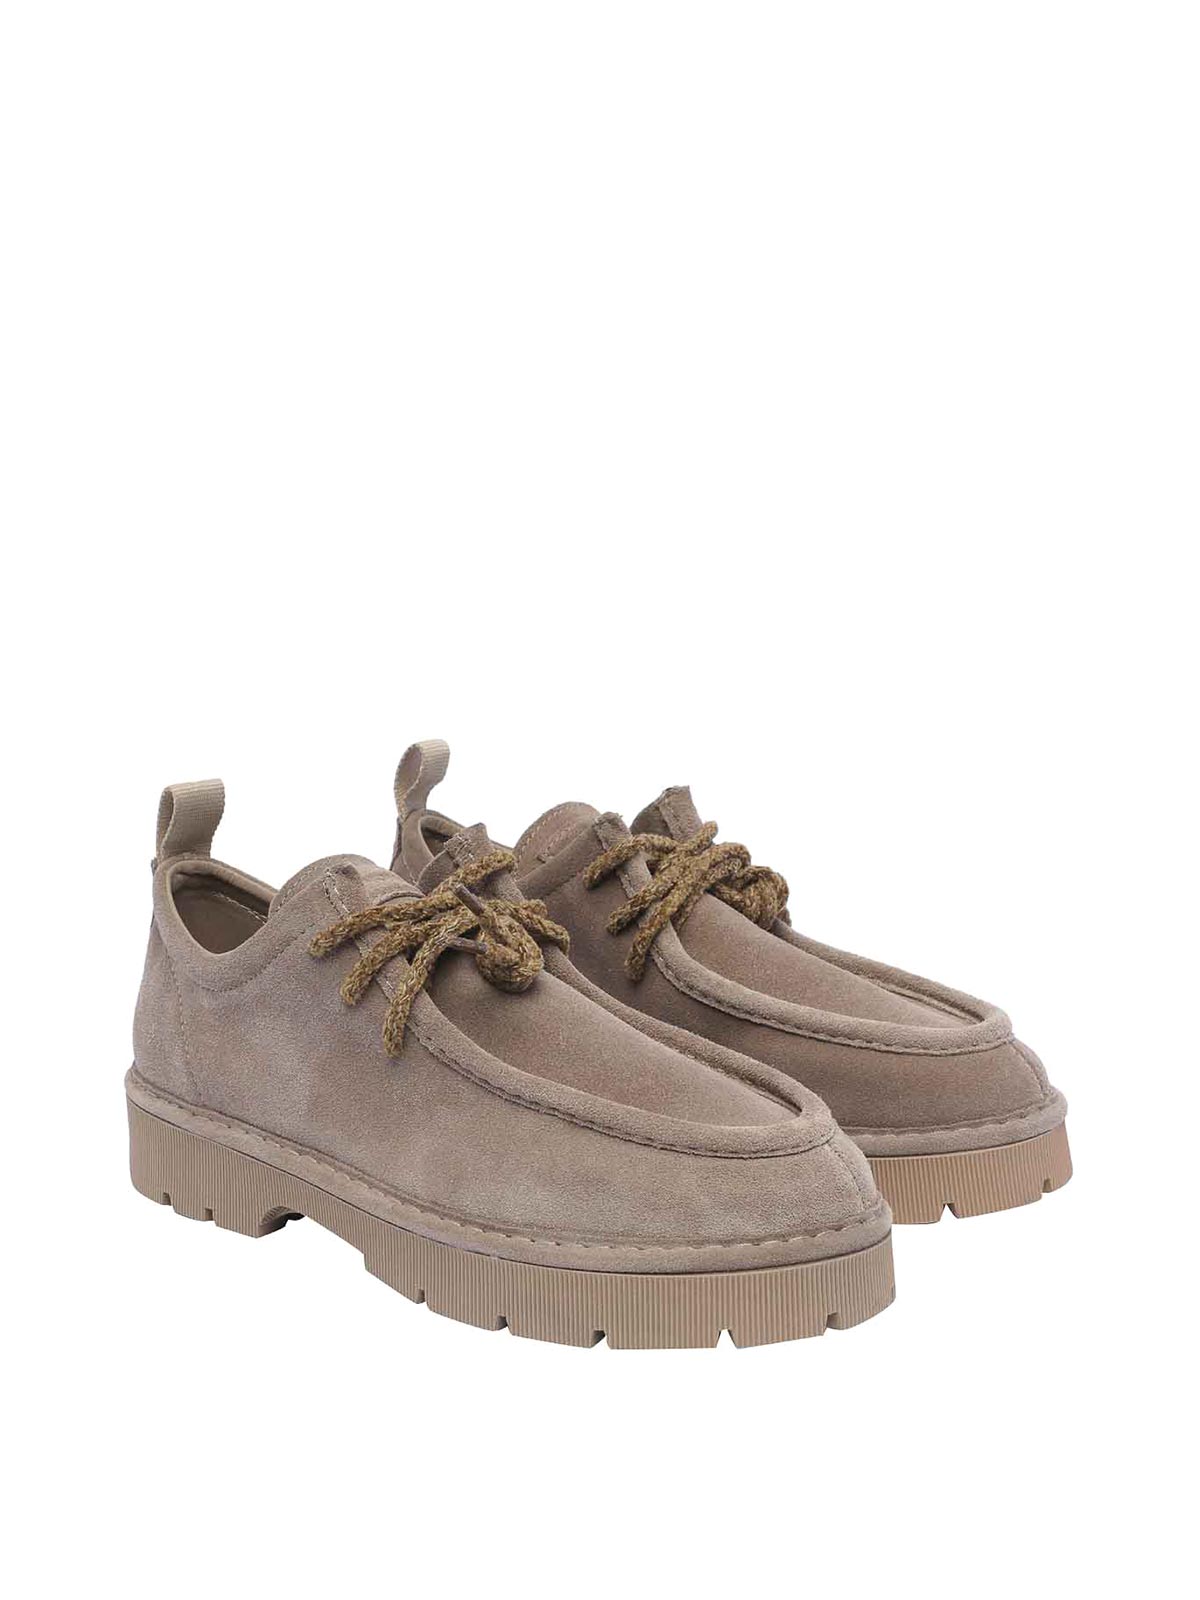 Shop Pànchic Zapatos Clásicos - P99 In Grey